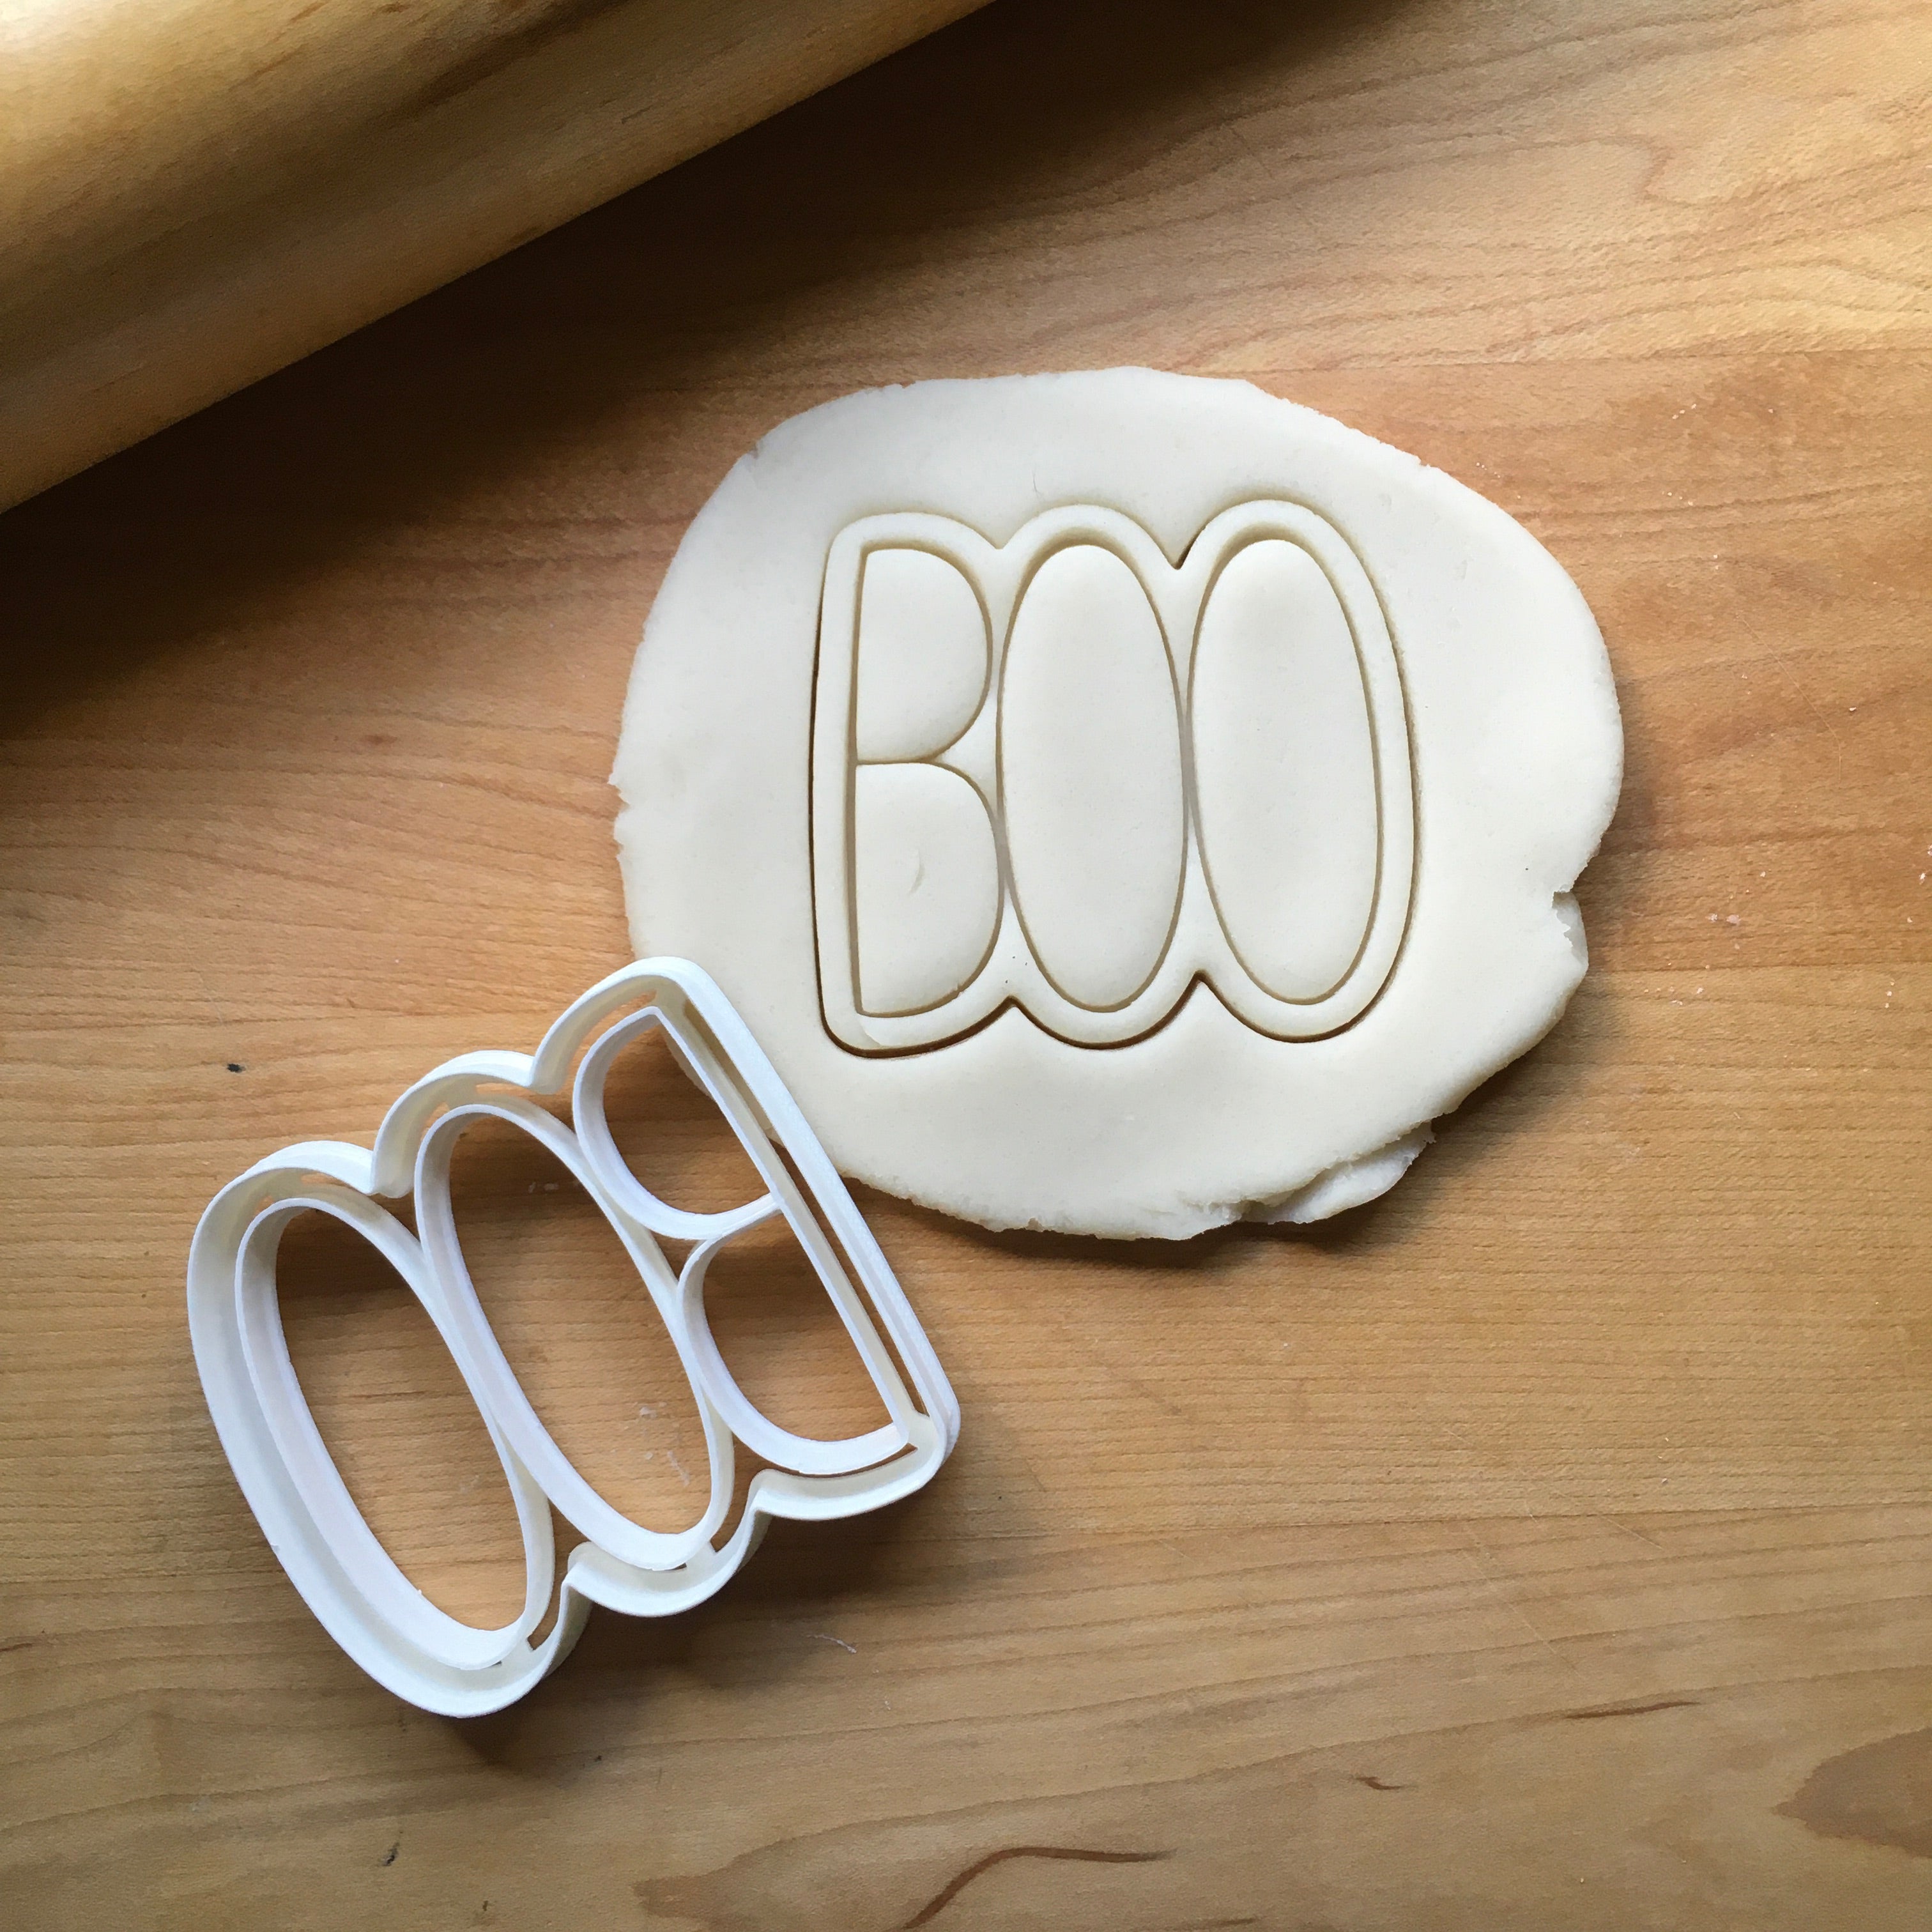 Boo Cookie Cutter/Dishwasher Safe